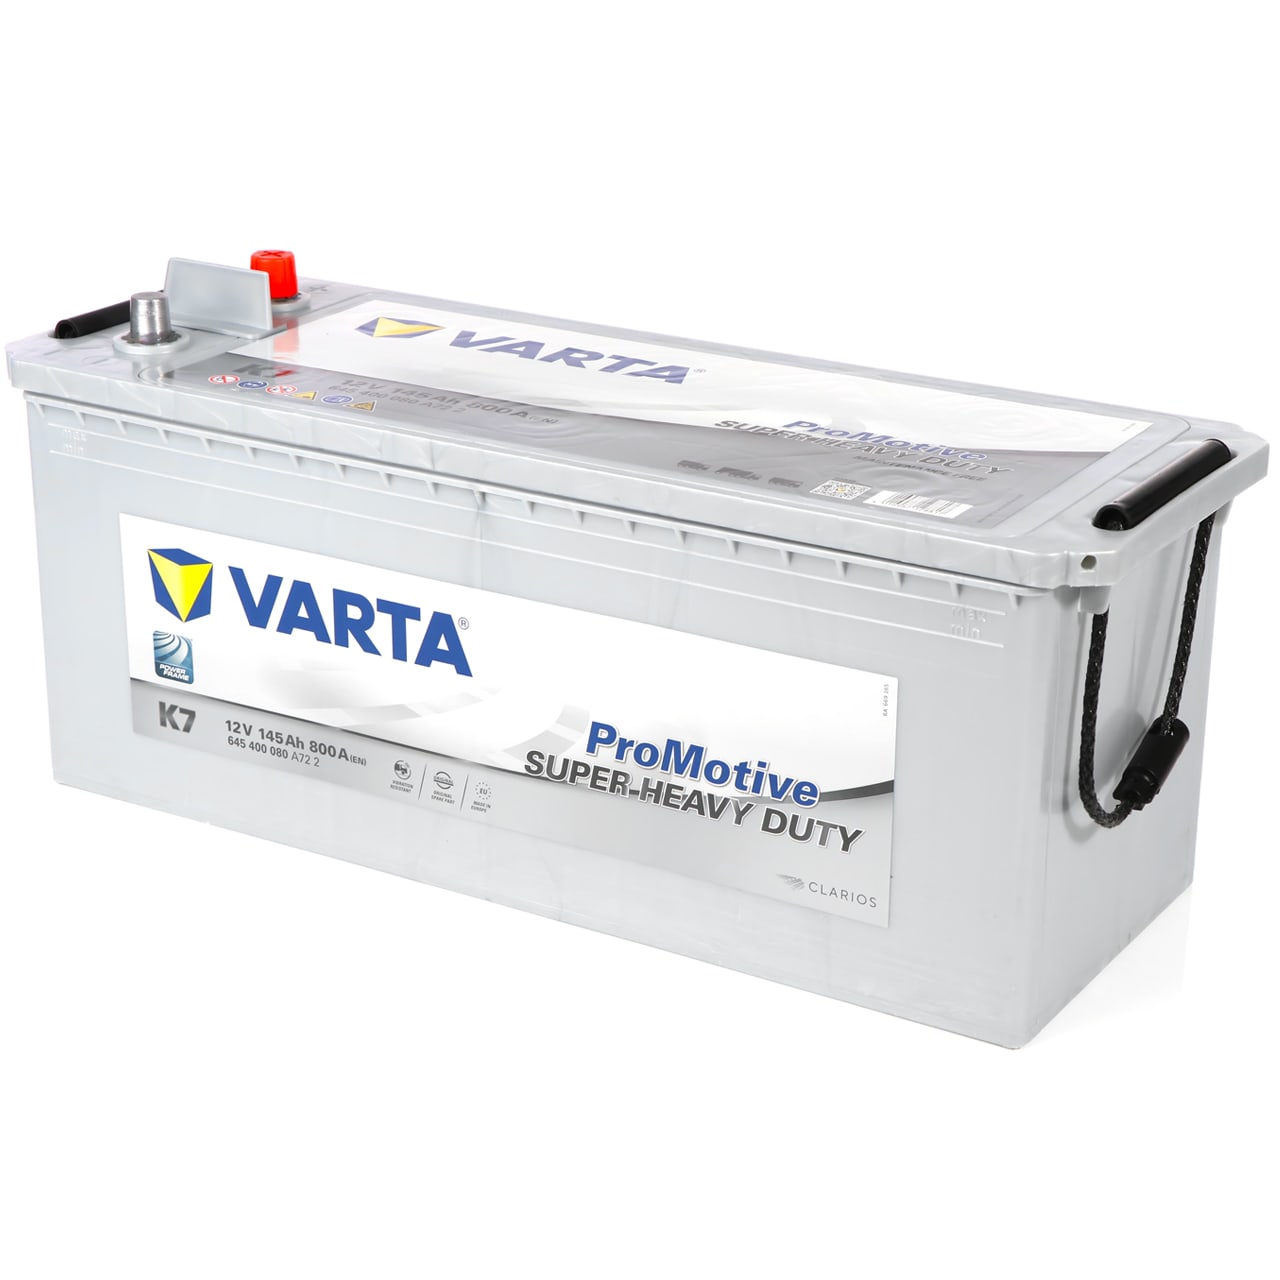 Varta K7 Promotive Silver 12V 145Ah 800A/EN